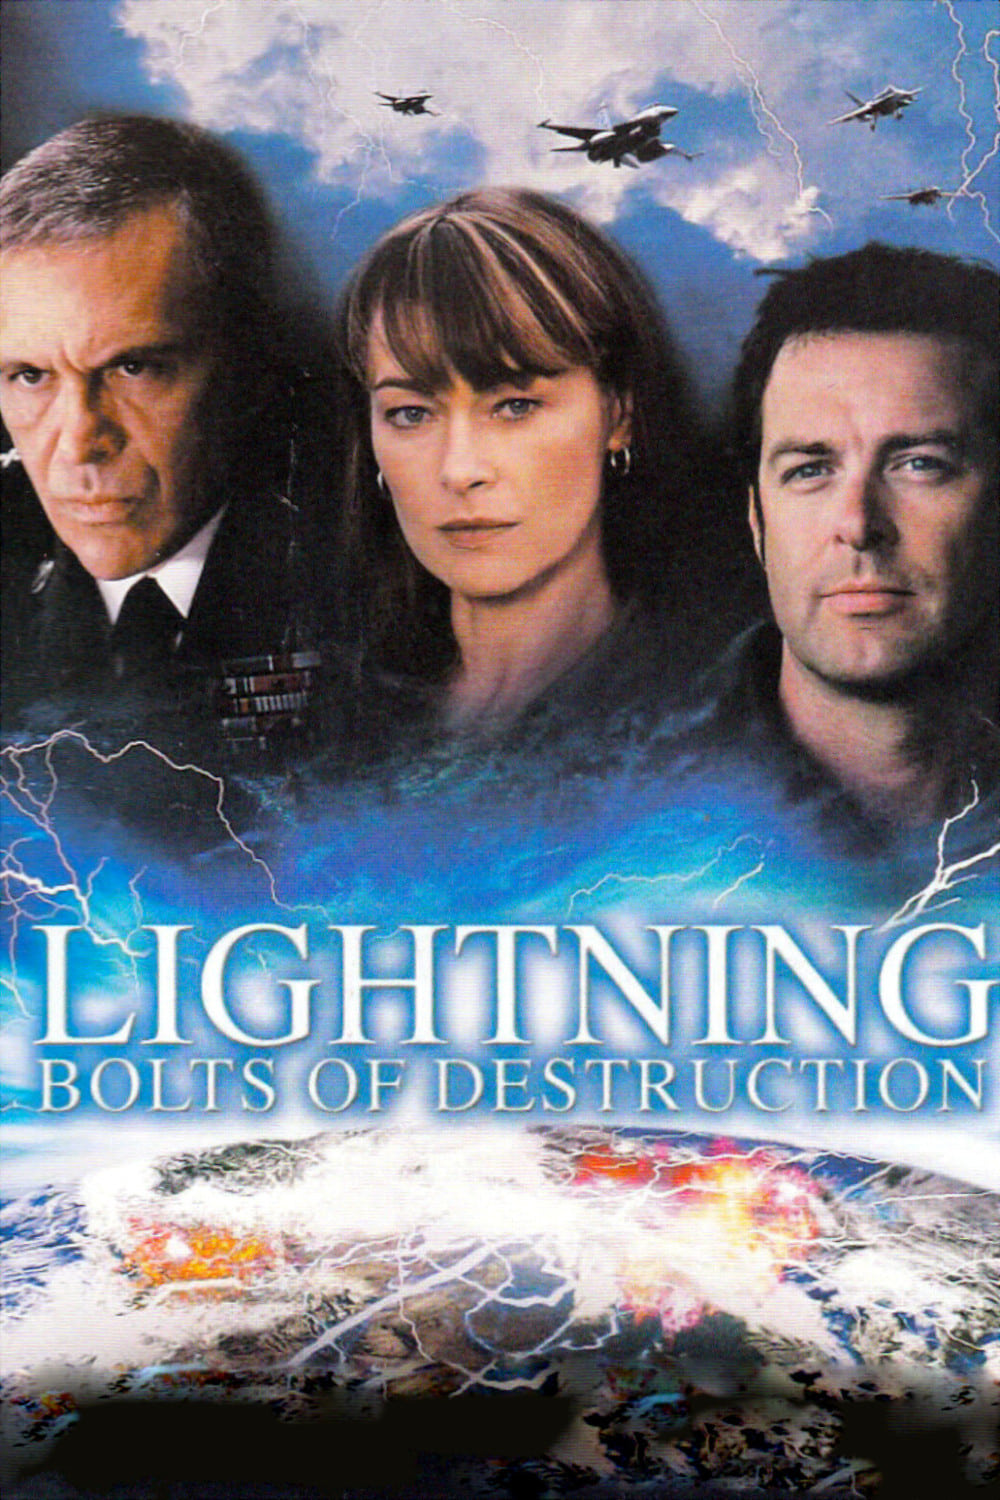 Lightning: Bolts of Destruction (2003)